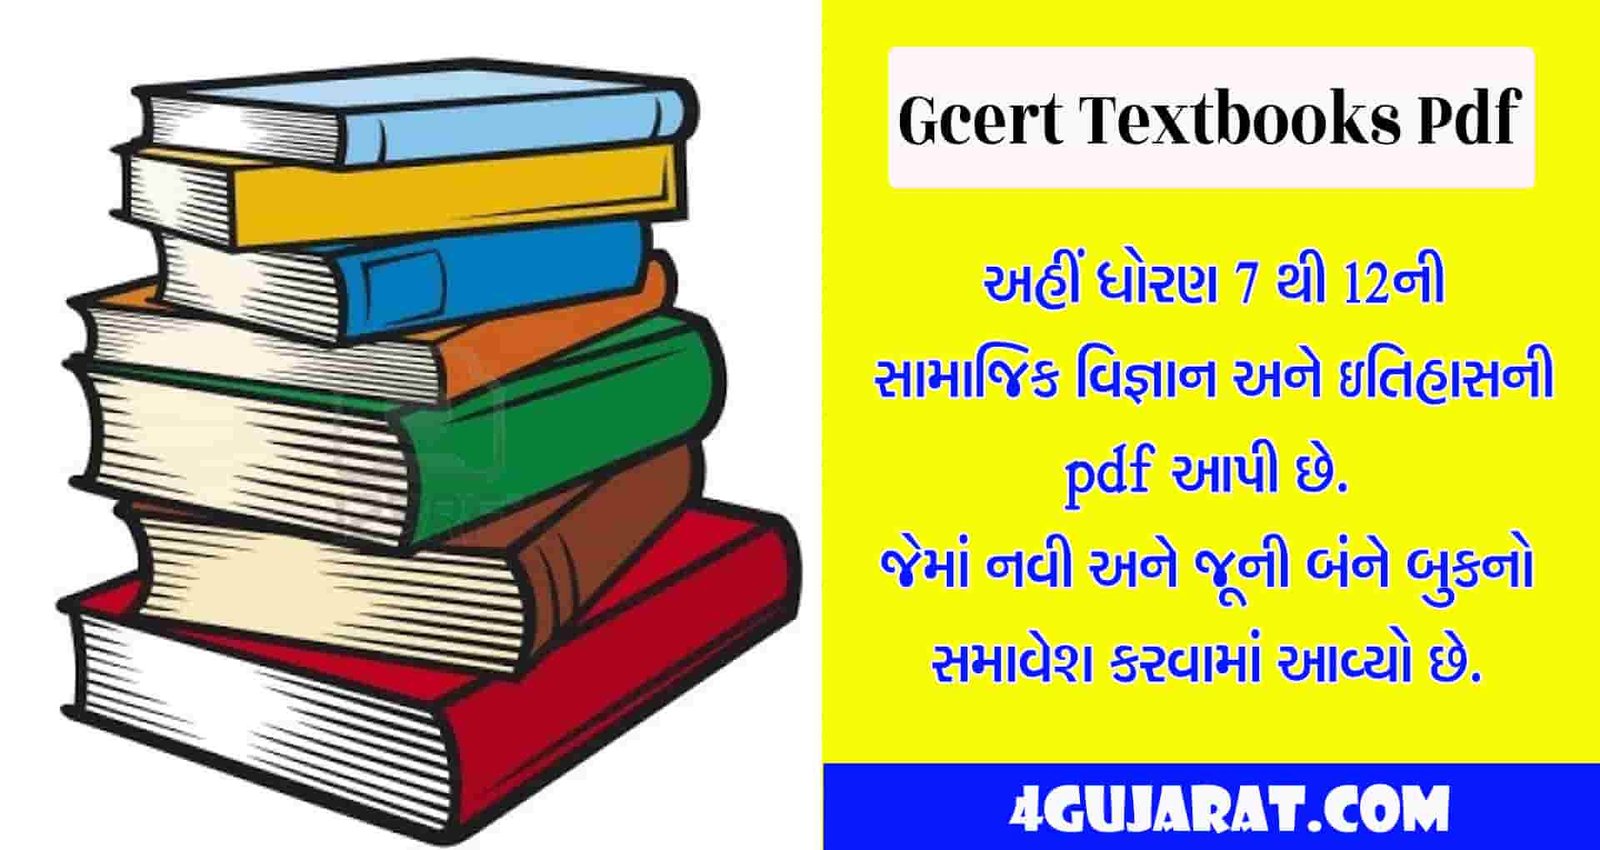 Gcert-books-pdf-download-in-gujarati